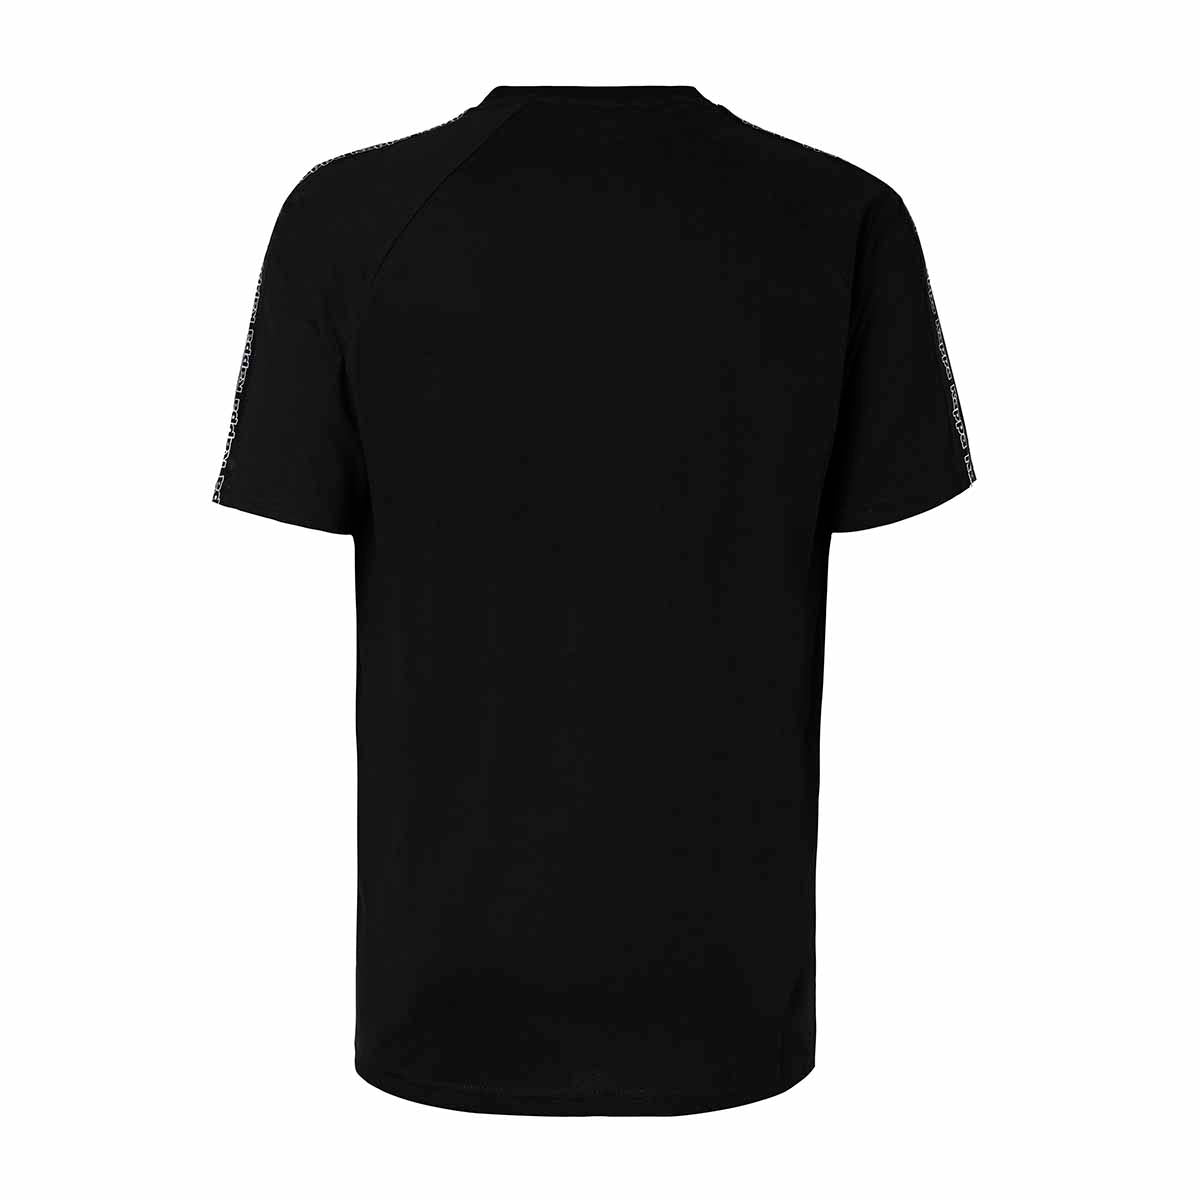 Kappa T-shirt Ipool Noir Homme - dos